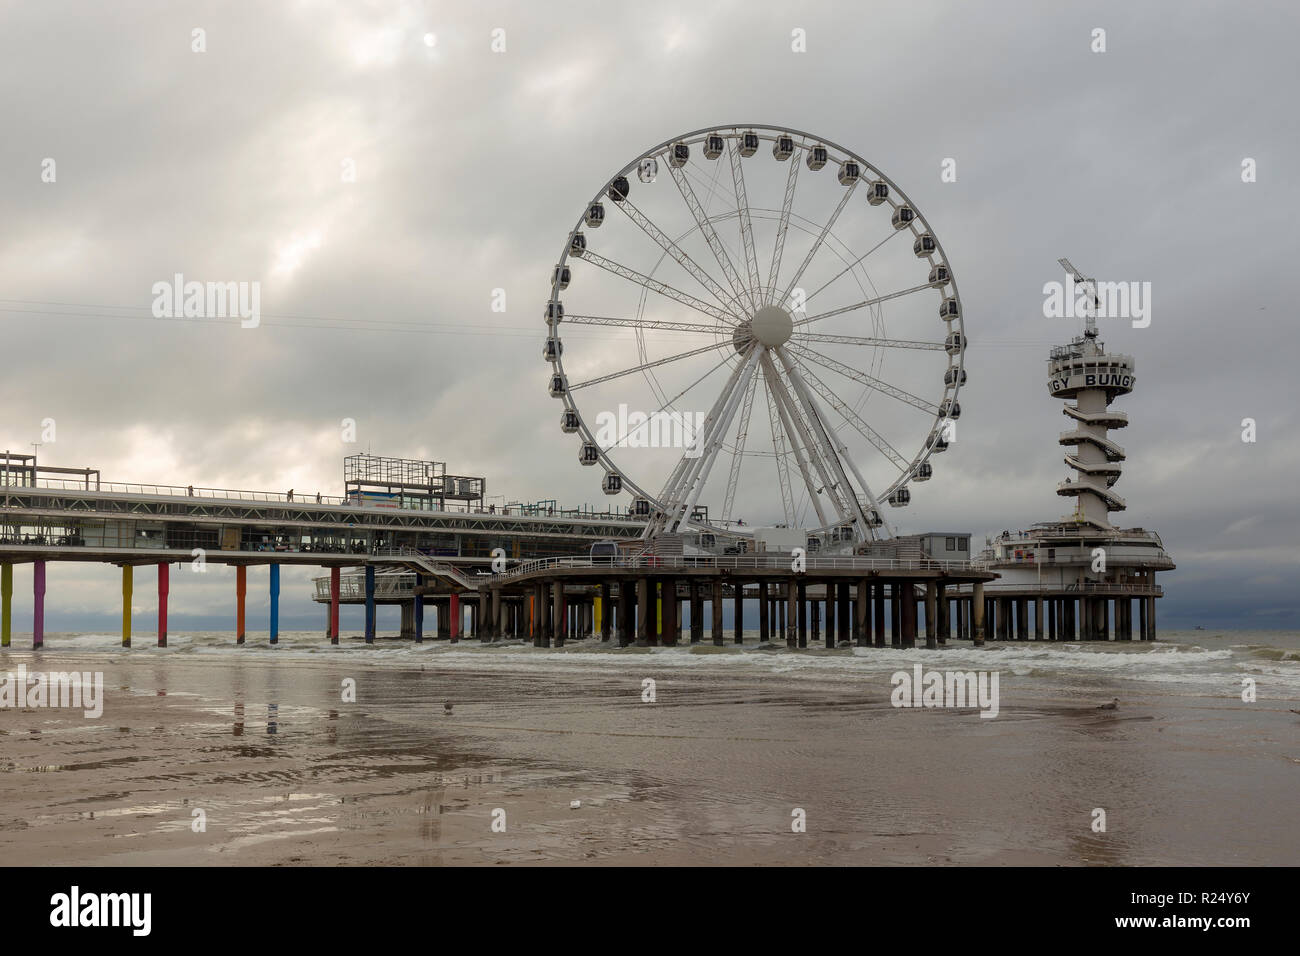 The Scheveningen Pier In The Hague, Netherlands Stock Photo